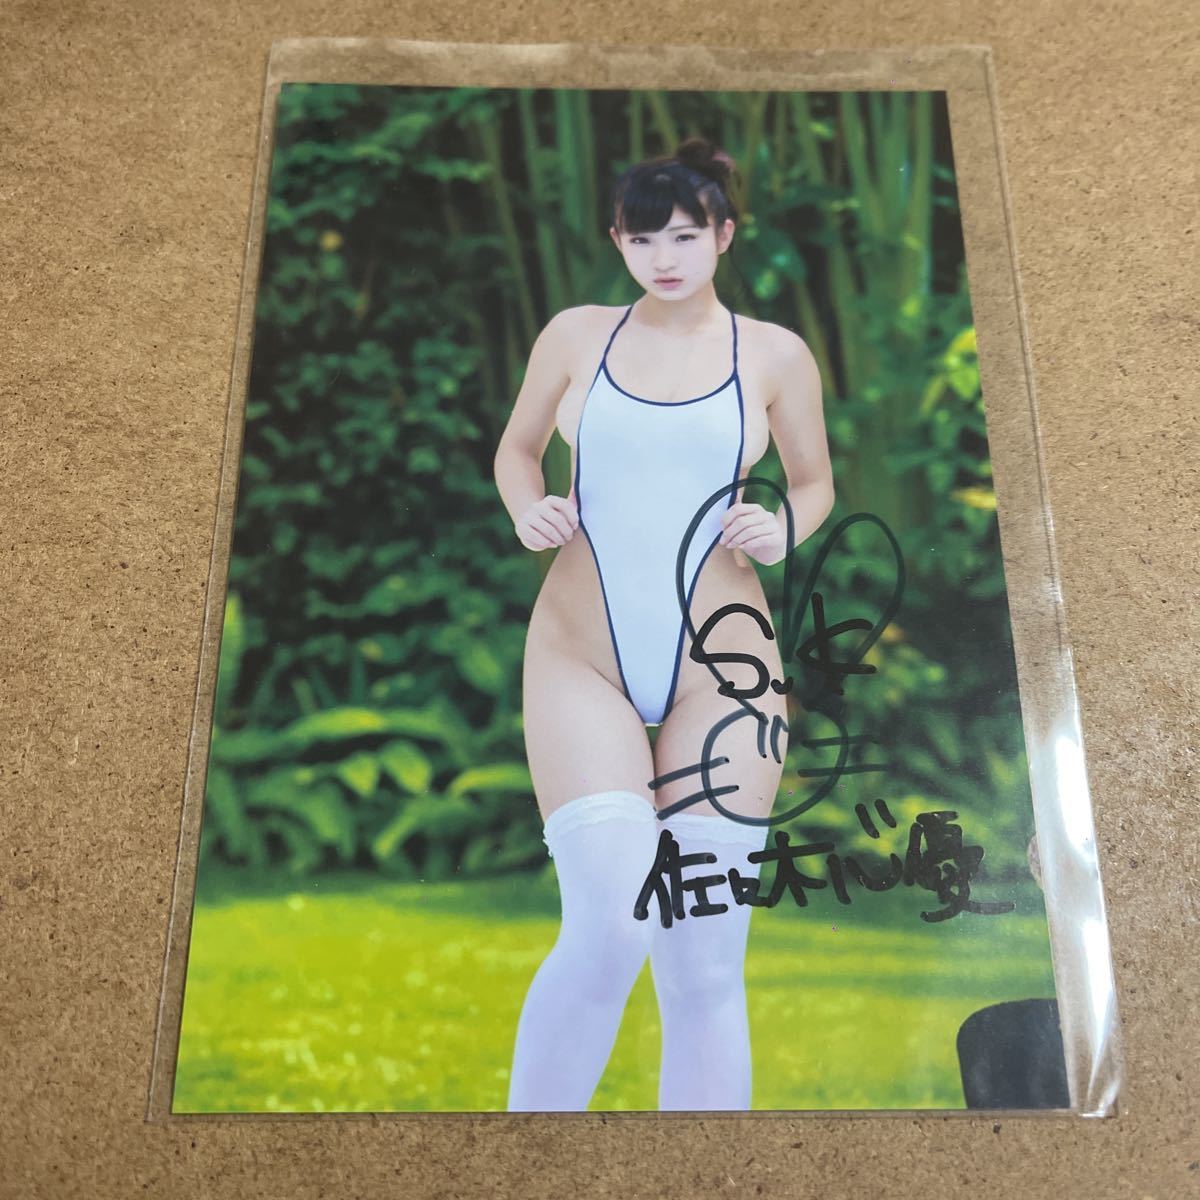 ◇ Shino Sasaki L Размер размер автограф с сырой фото Гресюра идол А